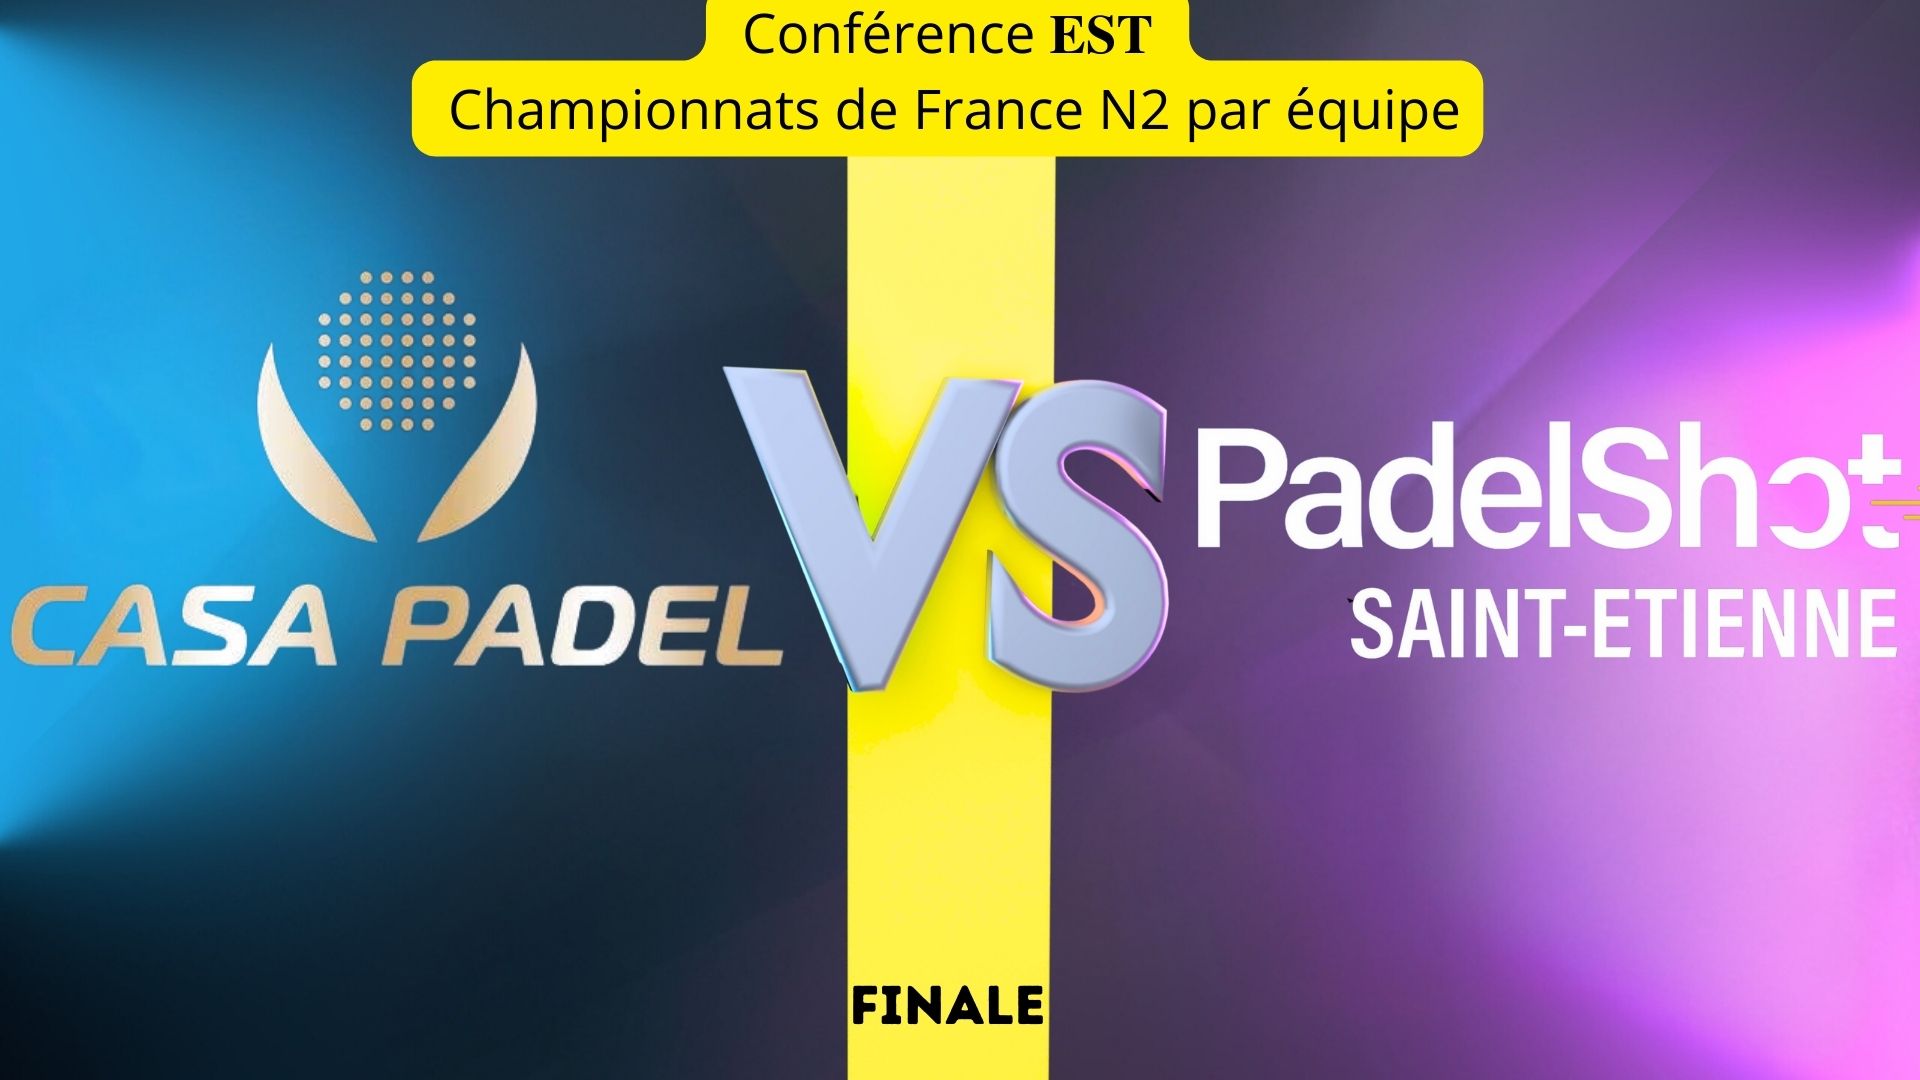 East Final: Casa Padel vs PadelShot Saint Etienne